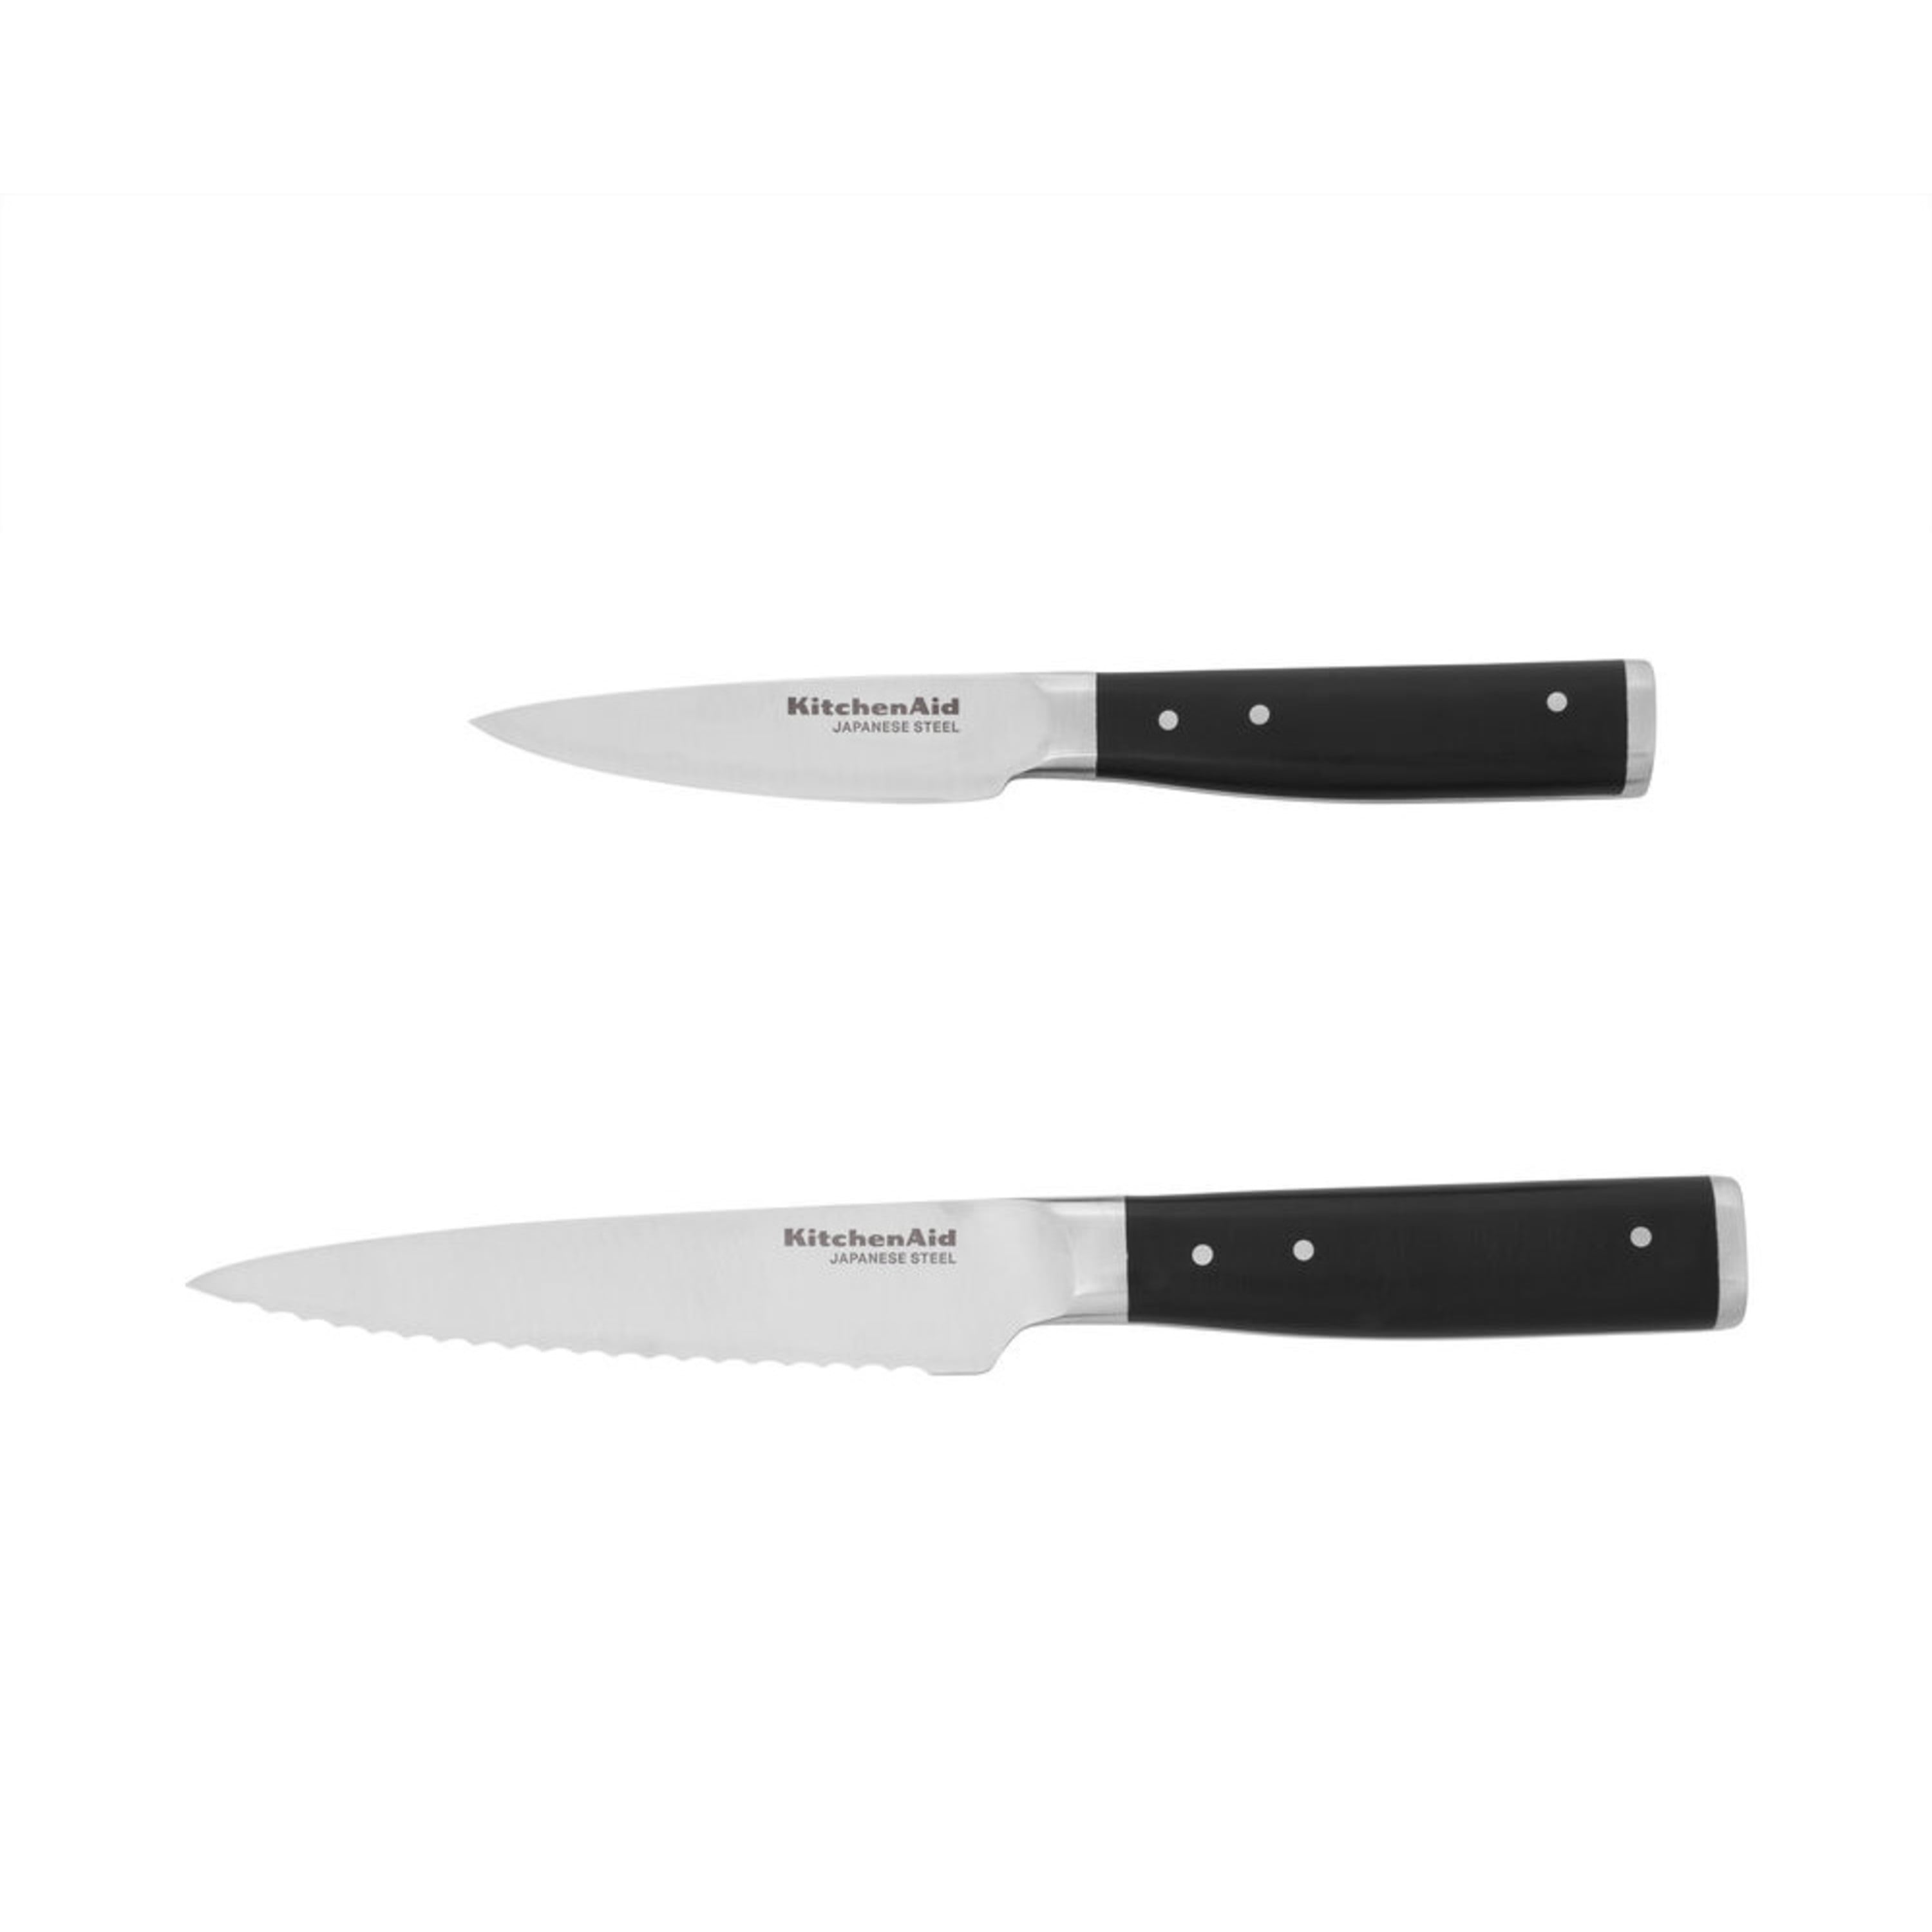 Kitchenaid Classic Forged 3.5-Inch Triple Rivet Paring Knife 